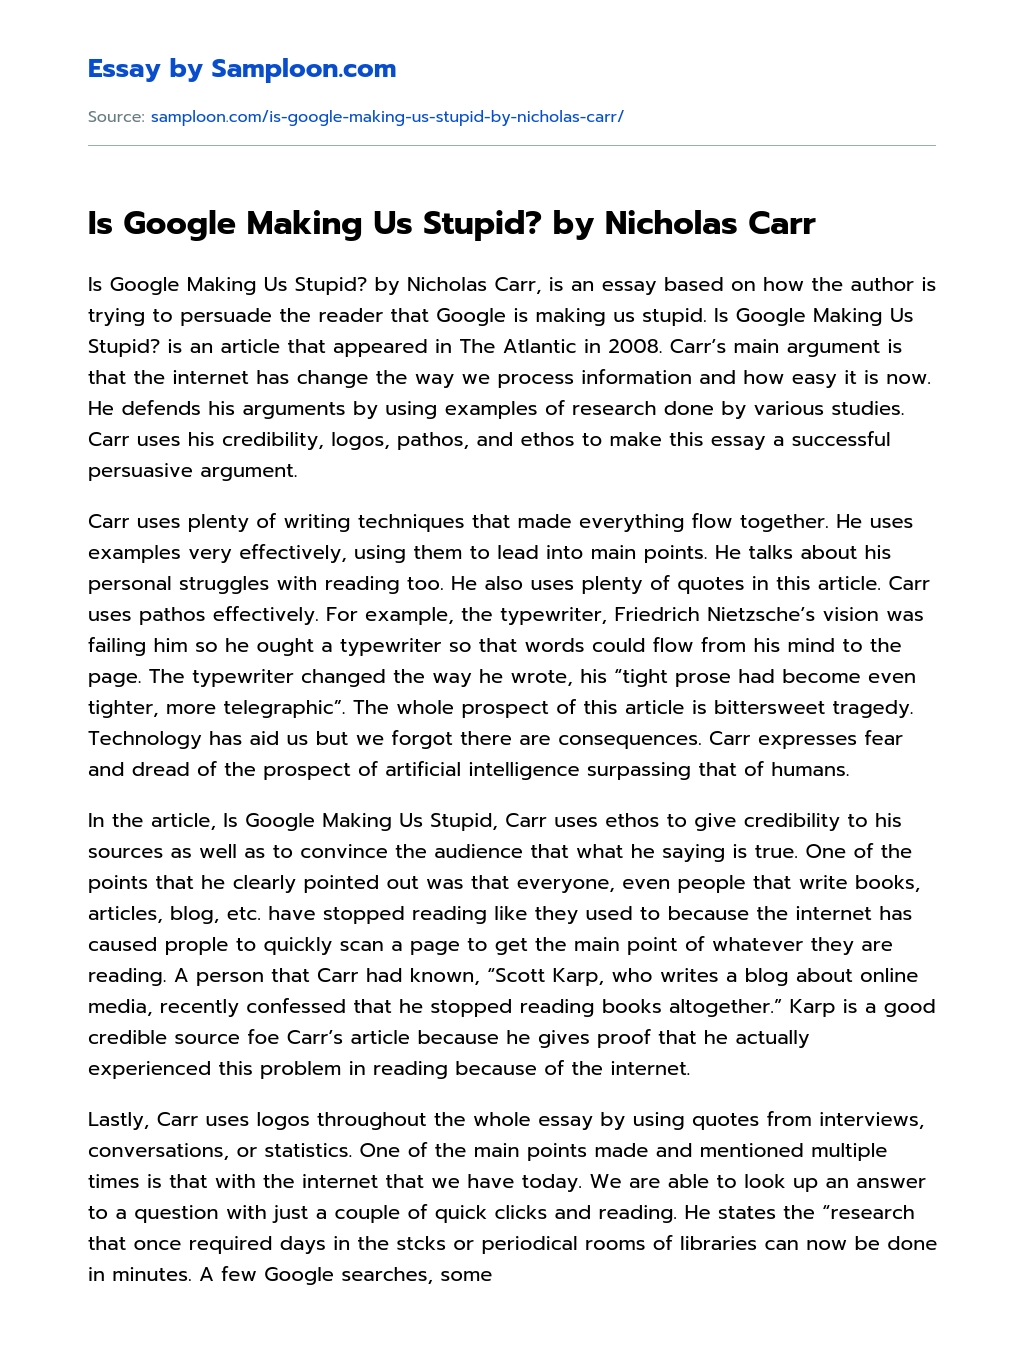 Is Google Making Us Stupid? by Nicholas Carr essay